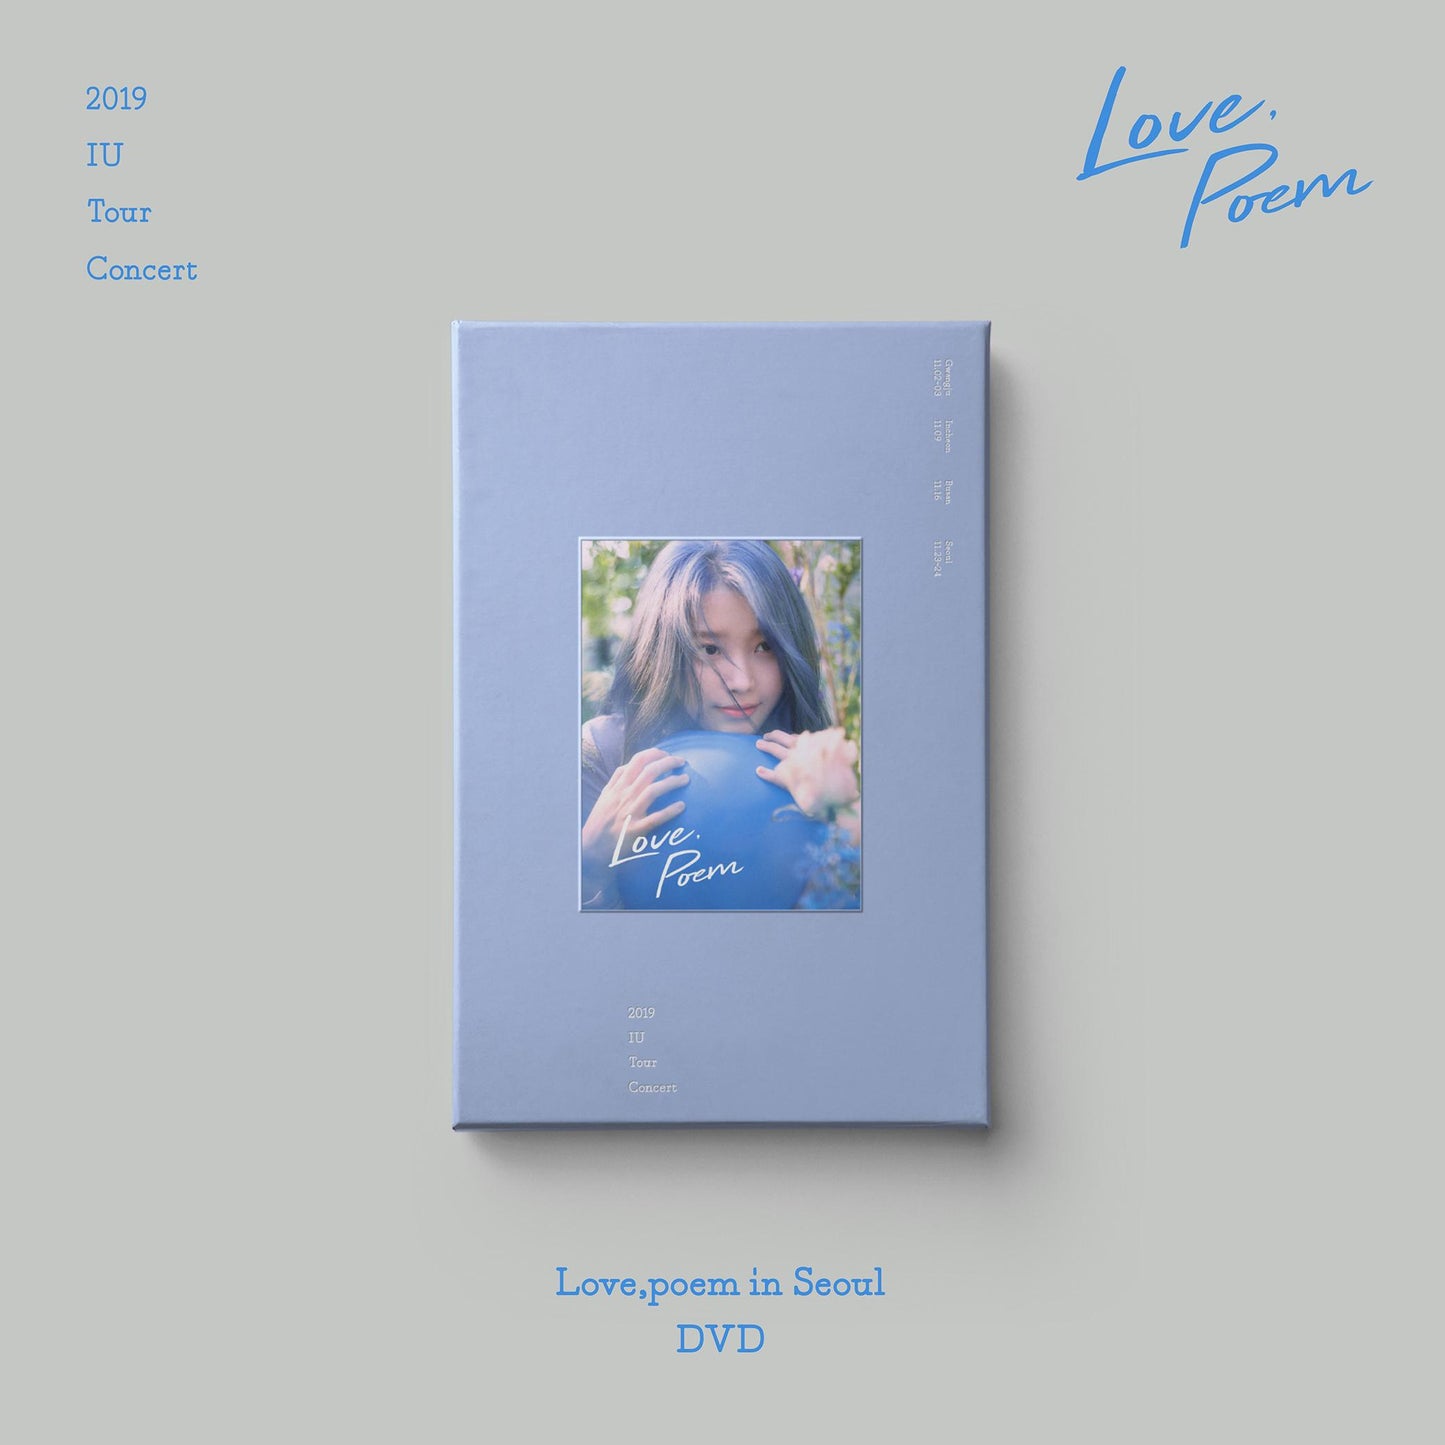 [IU] 2019 IU Tour Concert : Love, poem in Seoul DVD/Bluray